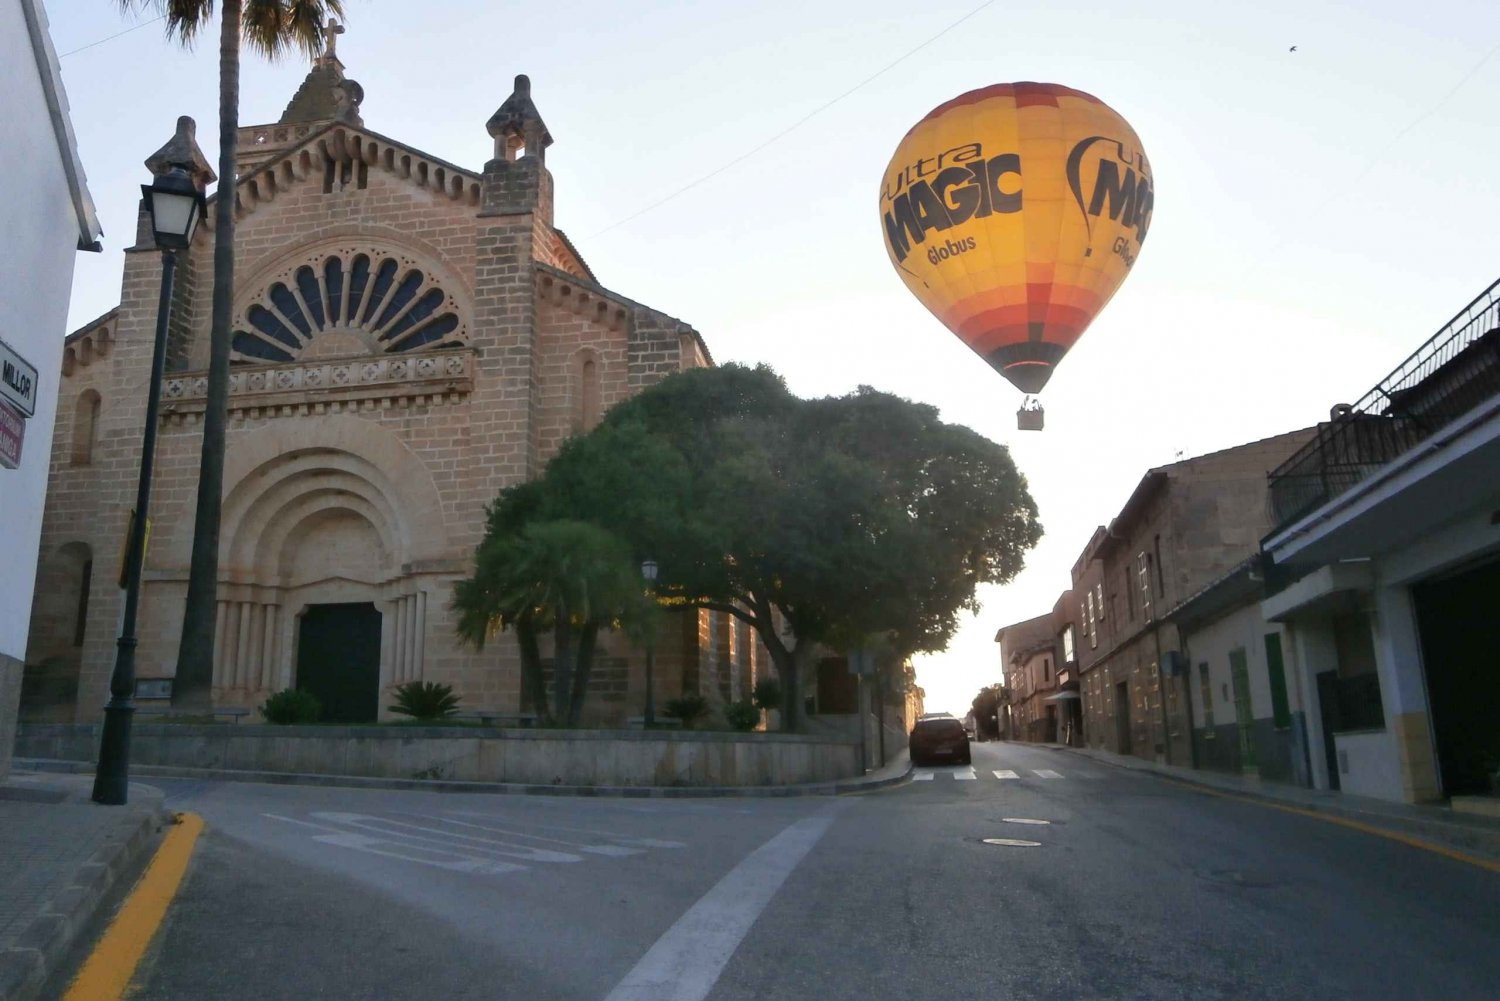 Mallorca: 1-Hour Hot Air Balloon Flight